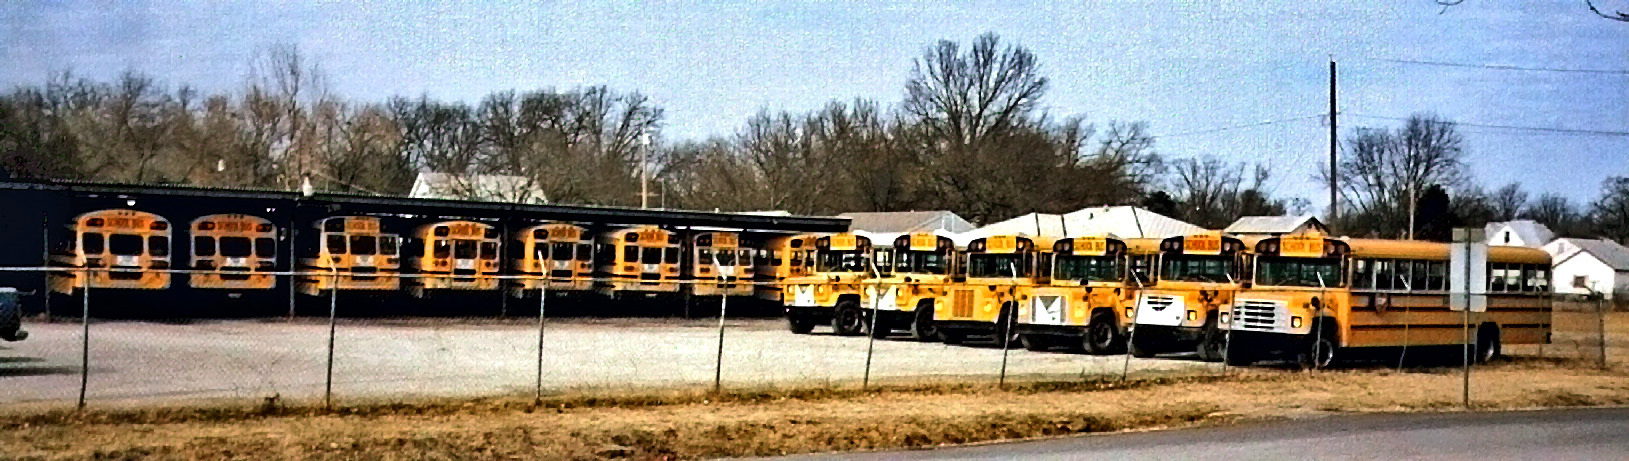 Bus lot in 1997